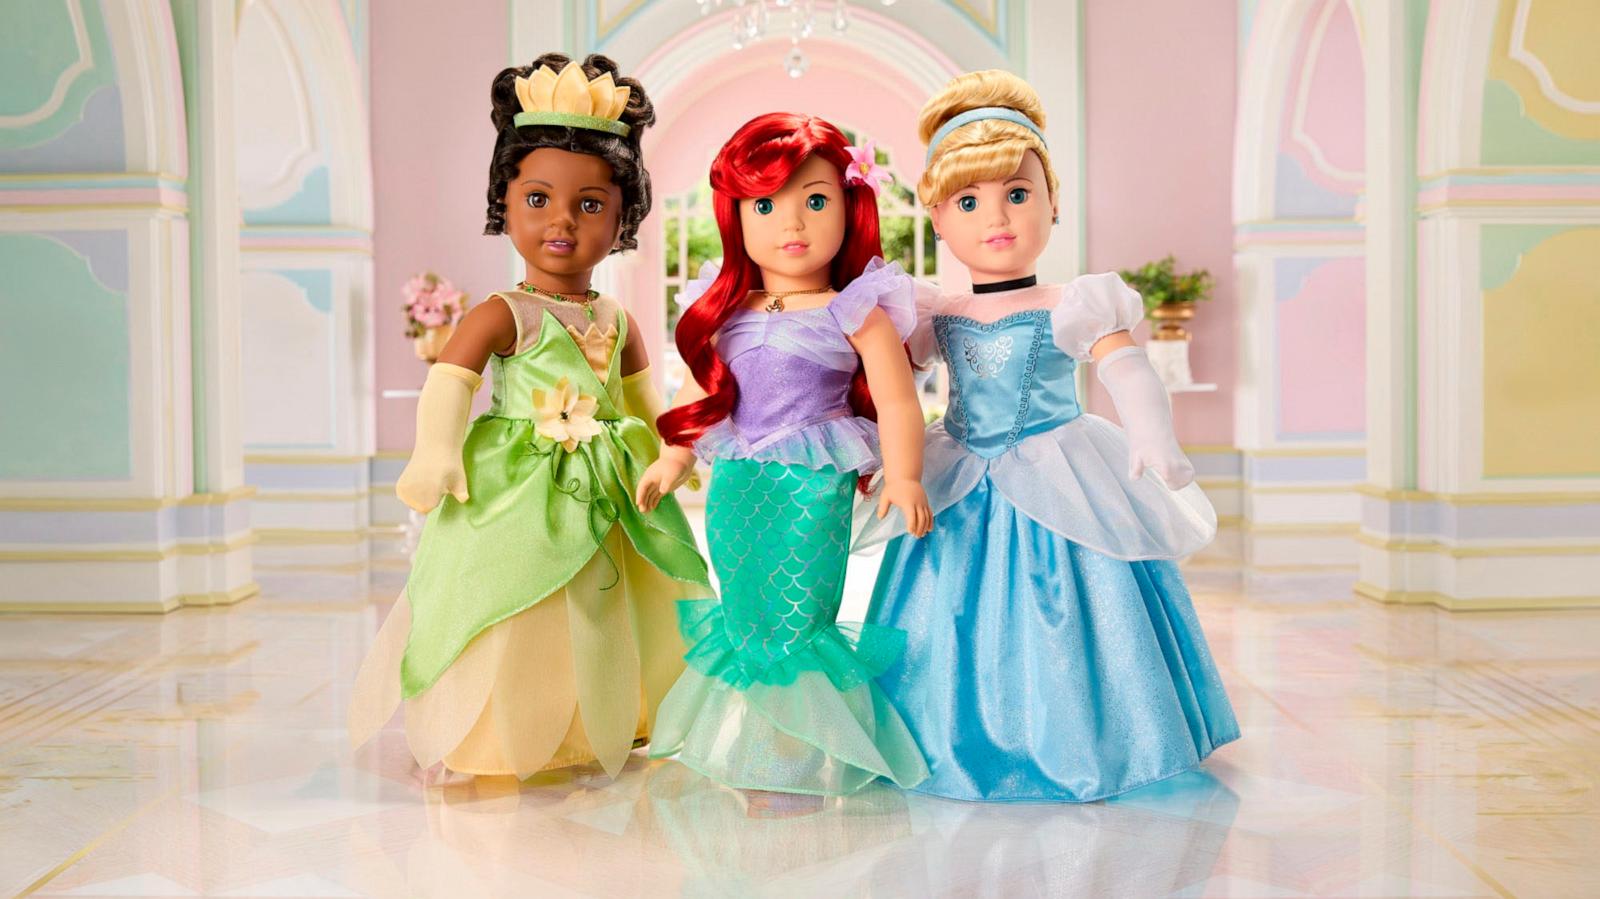 Disney Princess Disney Princess Sneaker - Kids' - Free Shipping